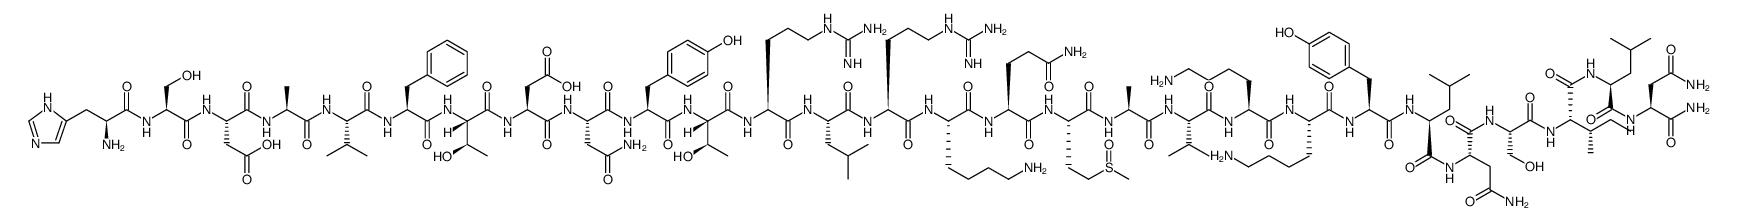 VIP sulfoxide (human, mouse, rat) trifluoroacetate salt picture